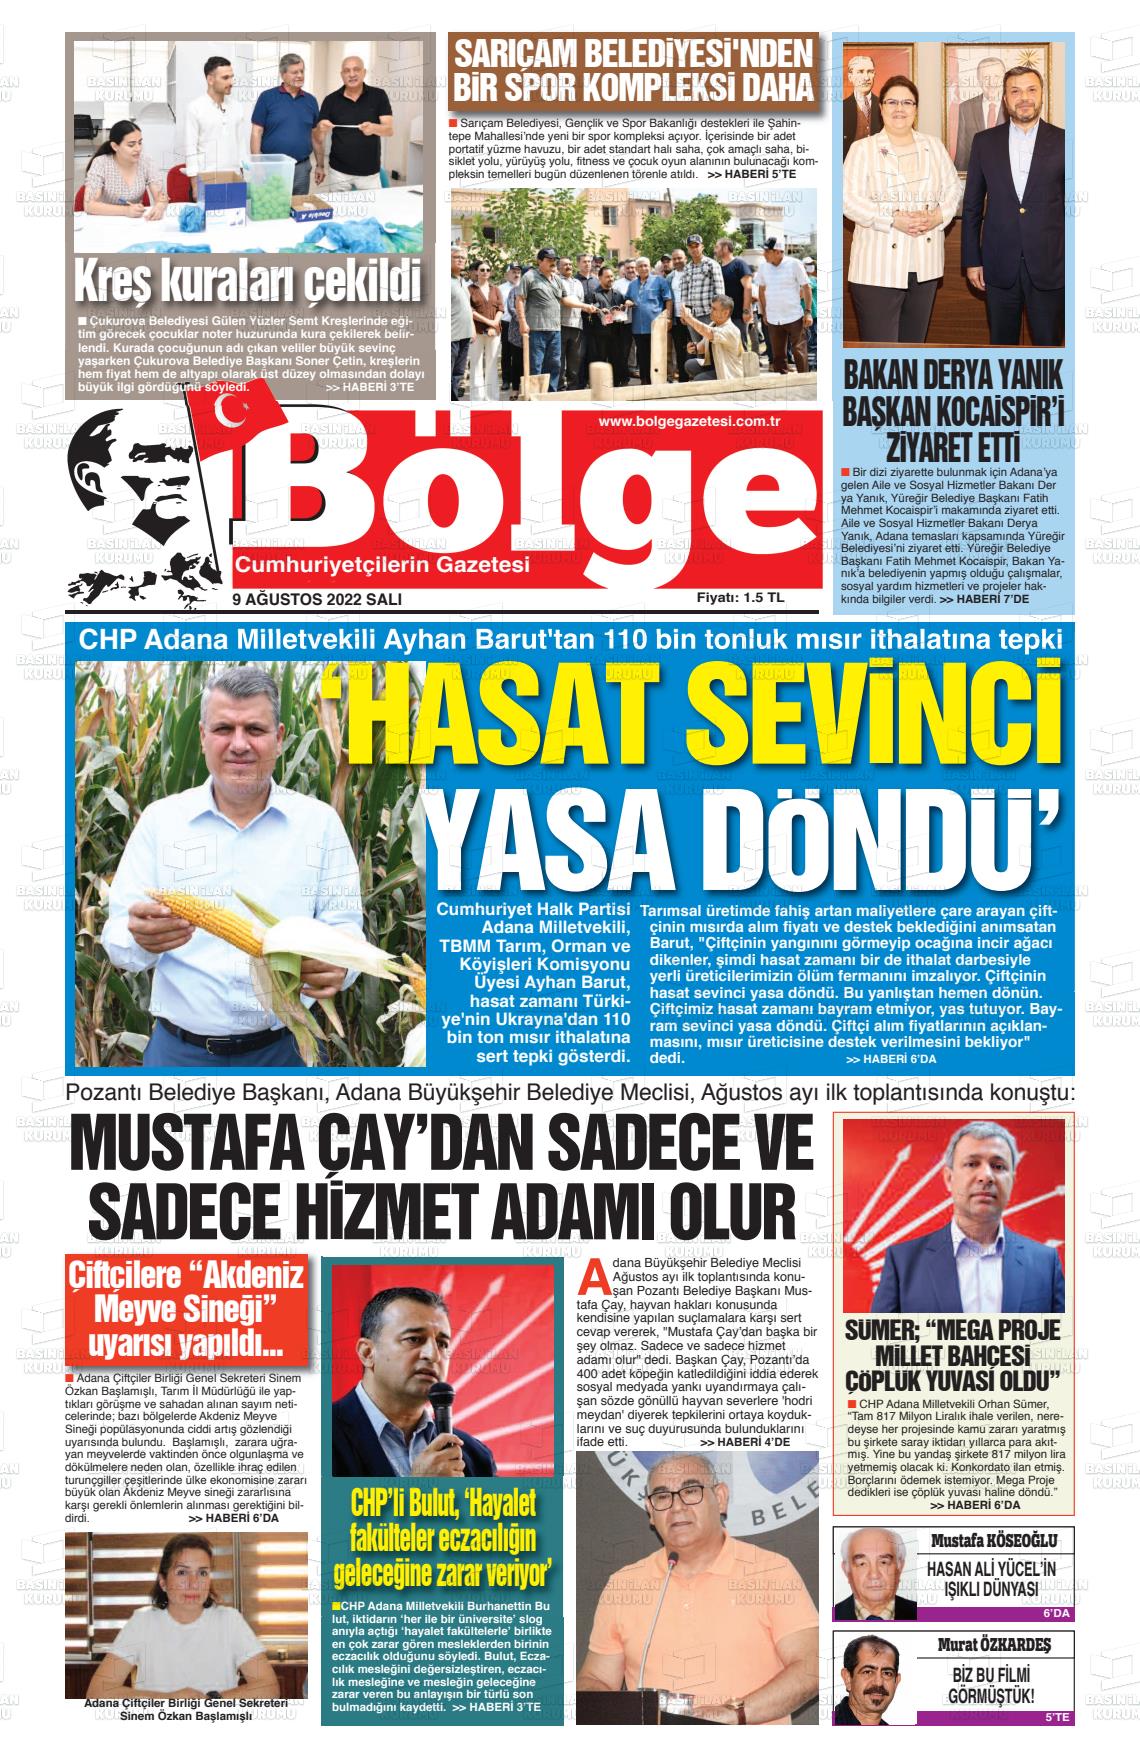 09 Ağustos 2022 Adana Bölge Gazete Manşeti